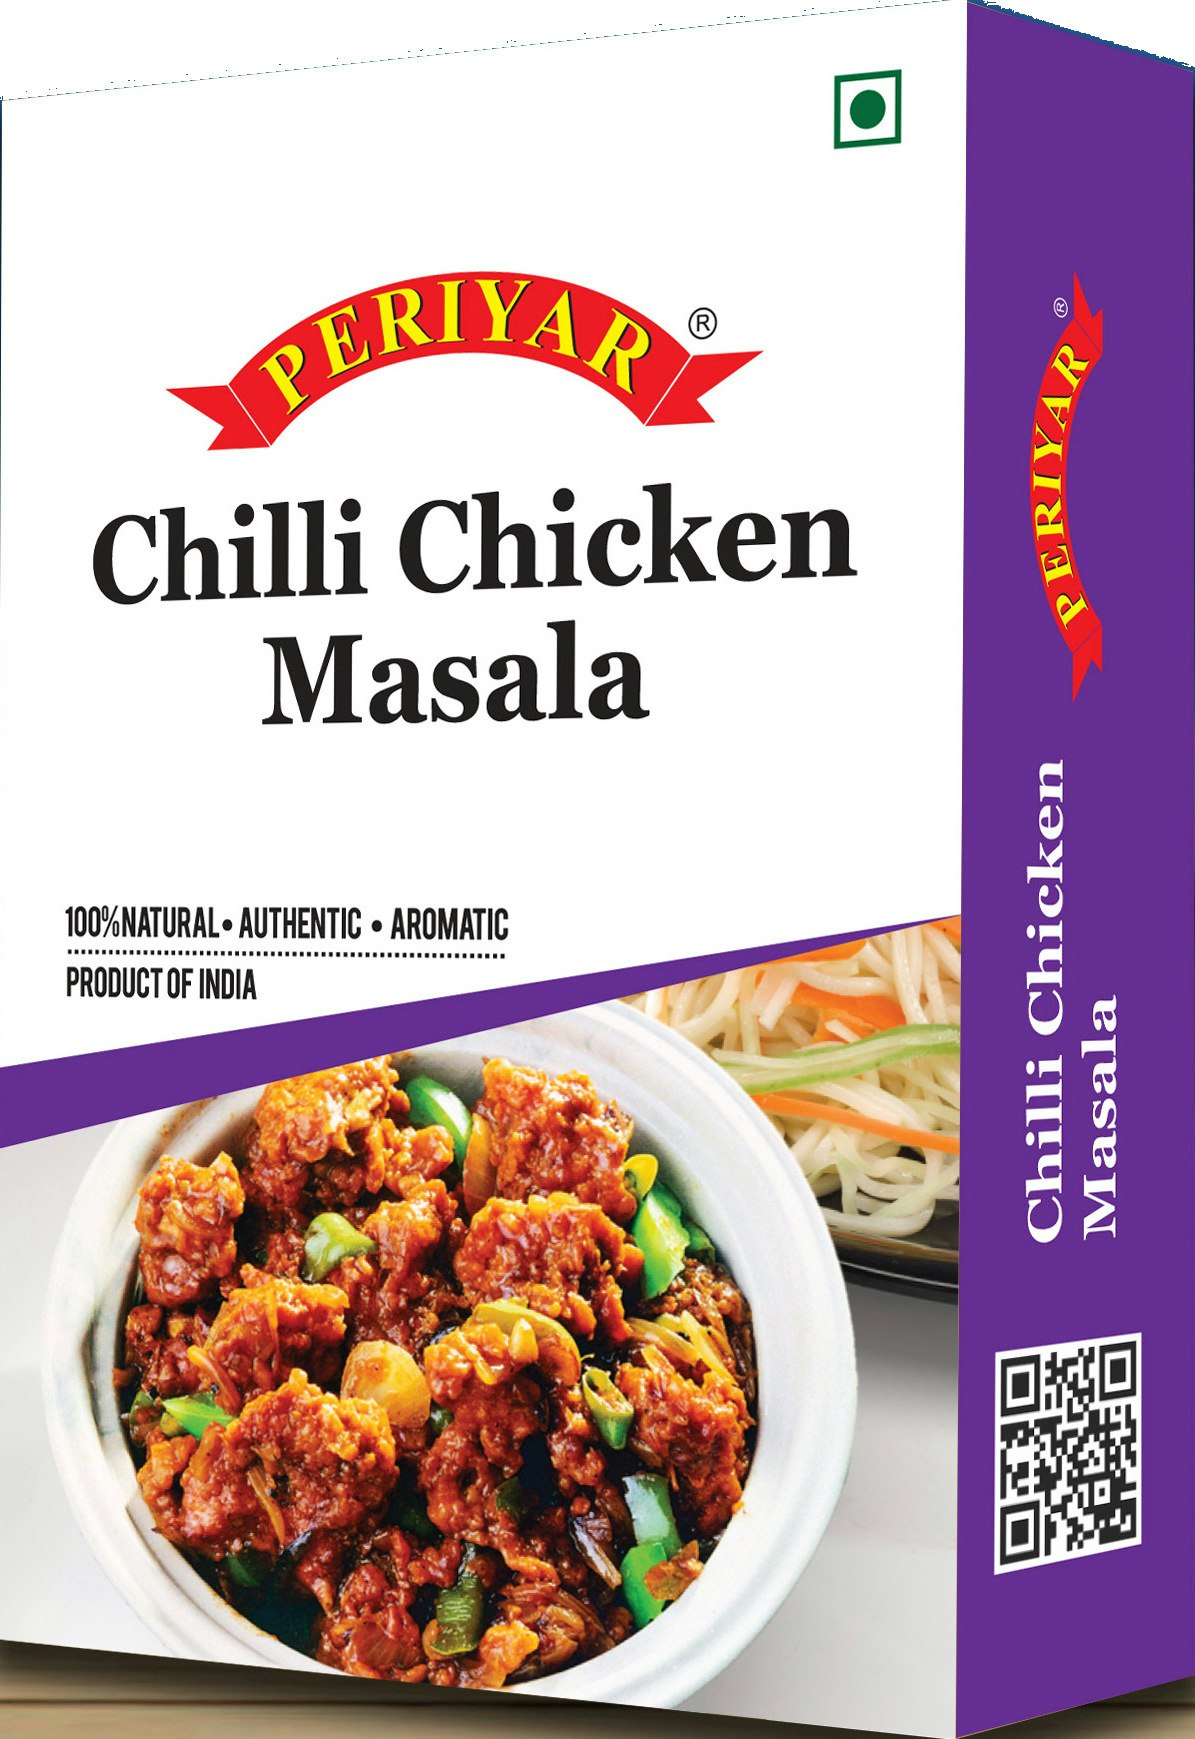 Chilli Chicken Masala (Periyar) 75g